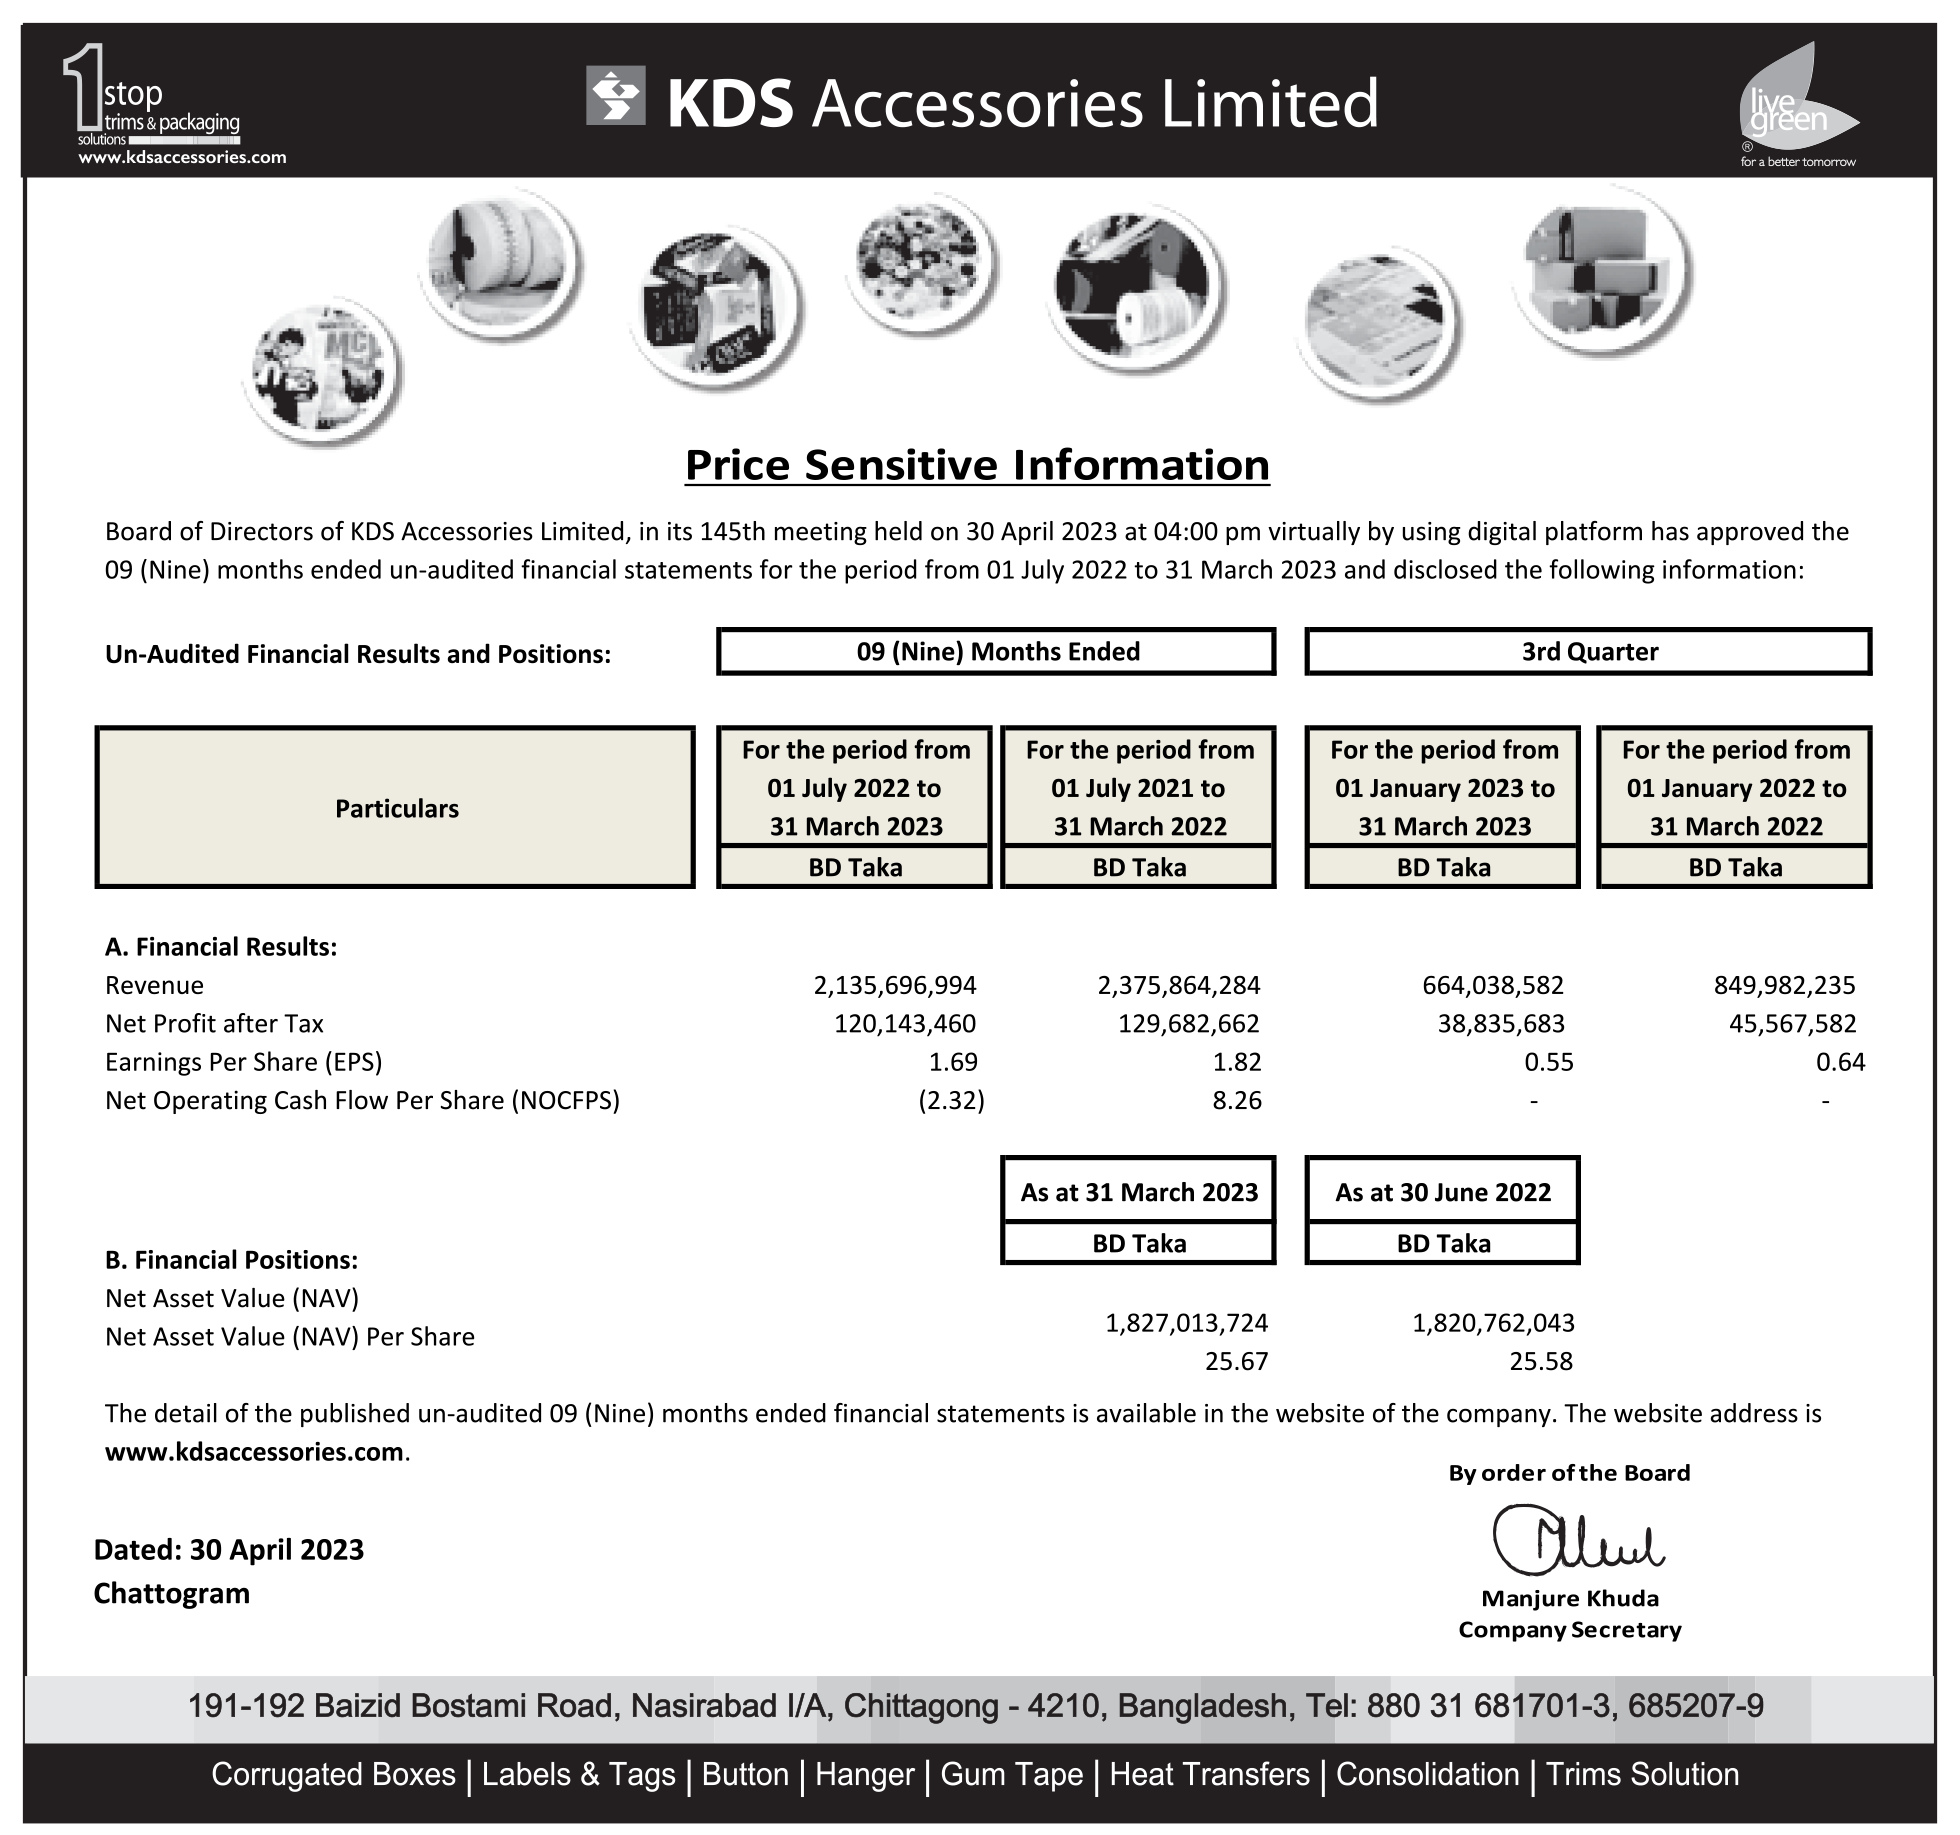 Price Sensitive Information Third-Quarter (Q3) of KDS Accessories Ltd